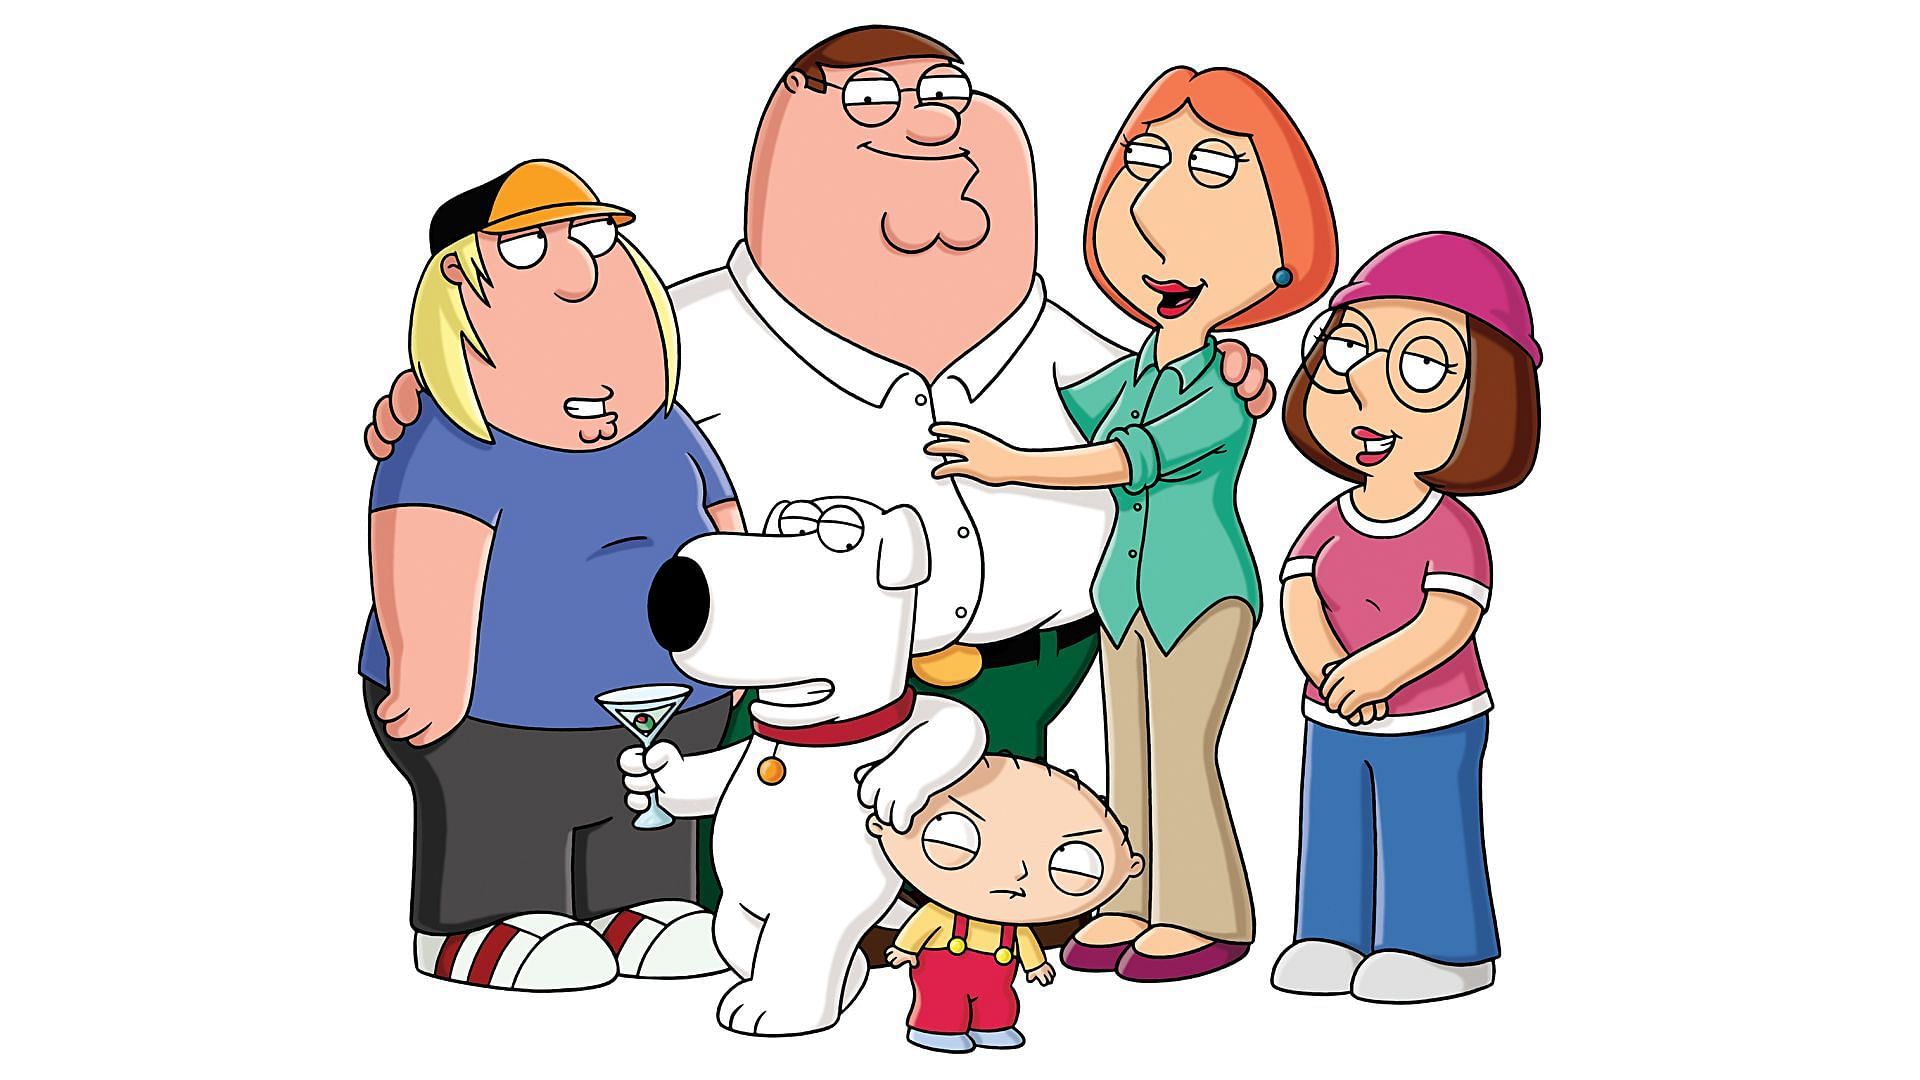 Family Guy collab might happen eventually. (Image via Fox)